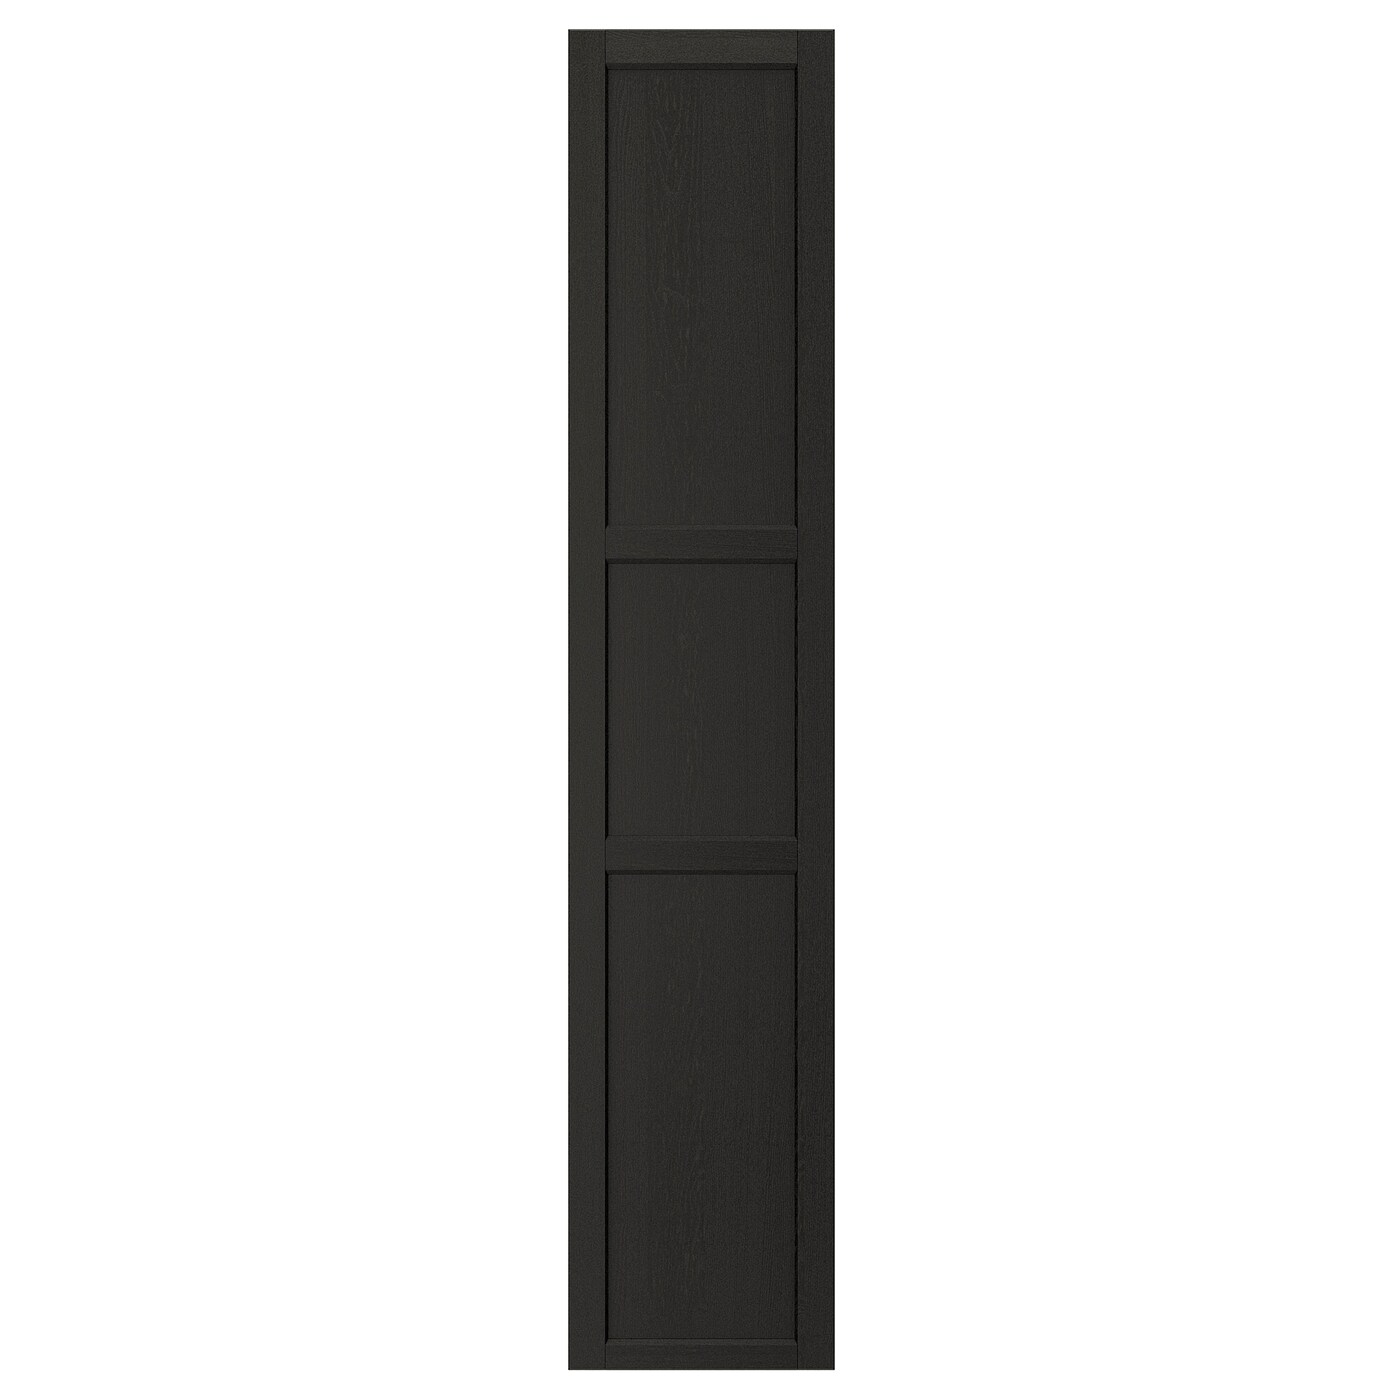 Фасад - IKEA LERHYTTAN, 100х40 см, черный, ЛЕРХЮТТАН ИКЕА